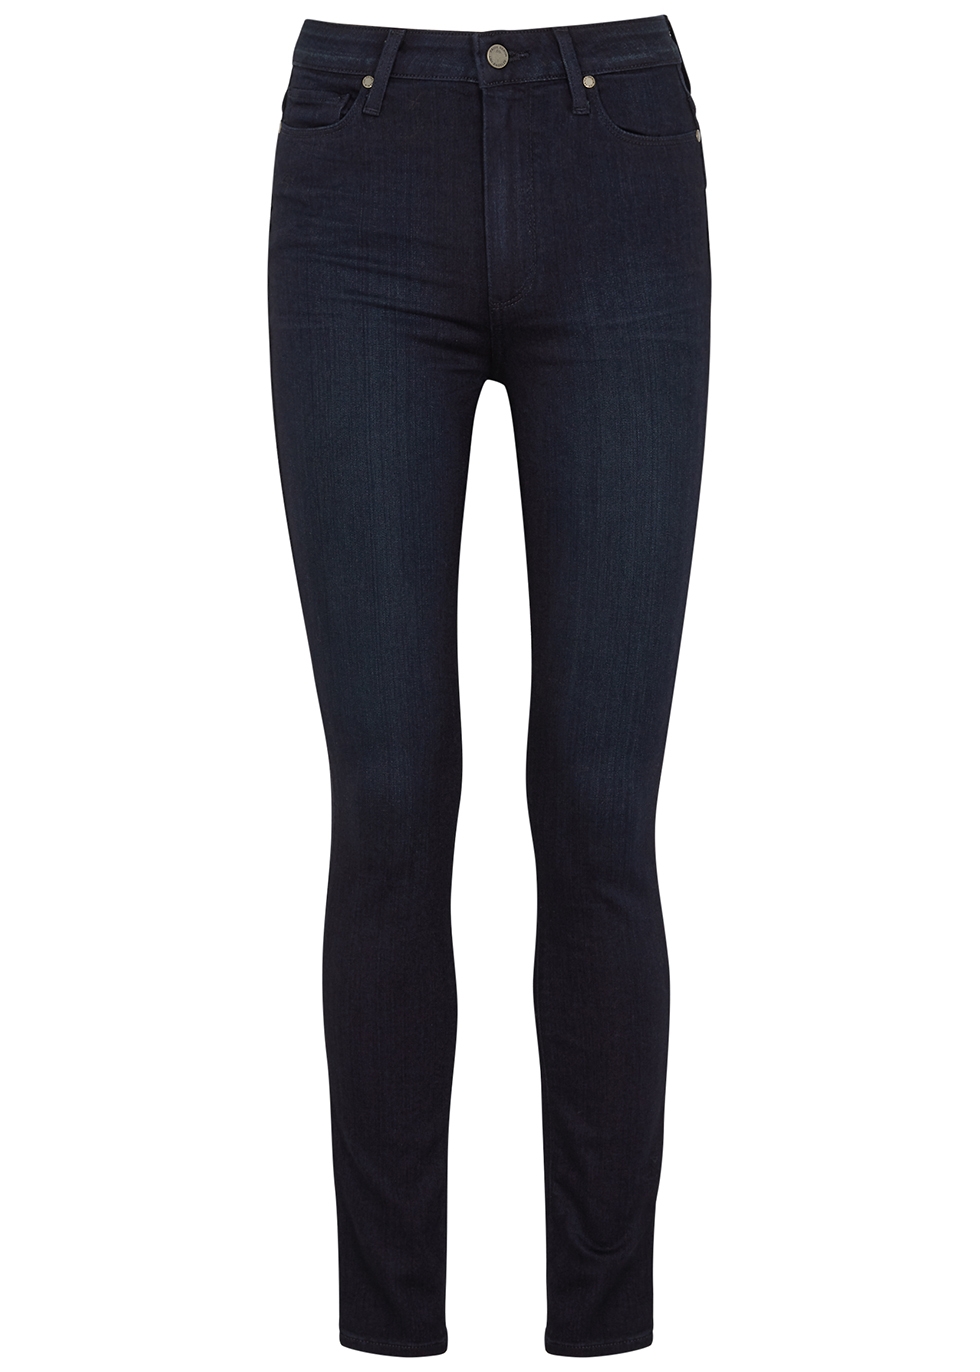 Paige Margot indigo skinny jeans - Harvey Nichols